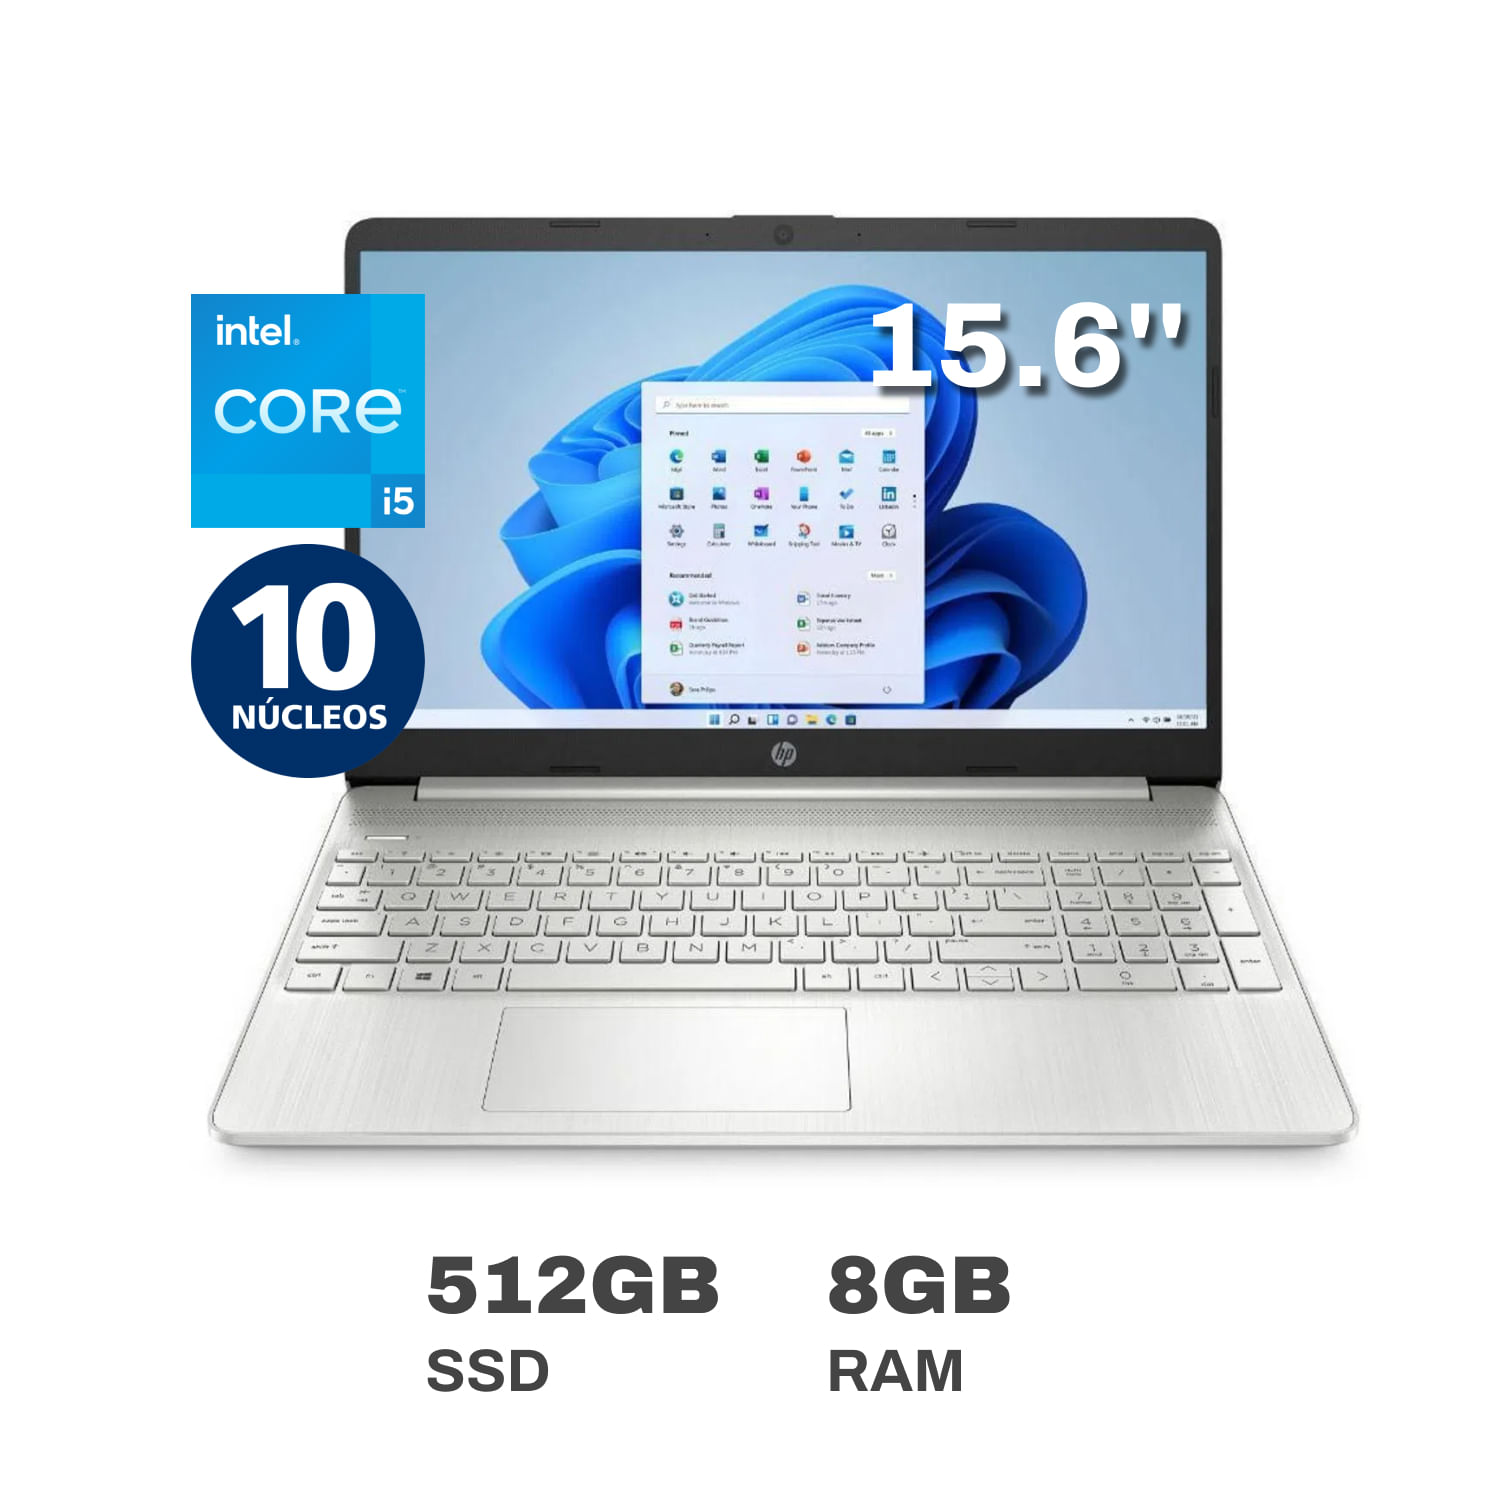 Laptop HP 15-dy5000la Intel Core i5 10 Núcleos 8GB RAM 512GB SSD 15.6"